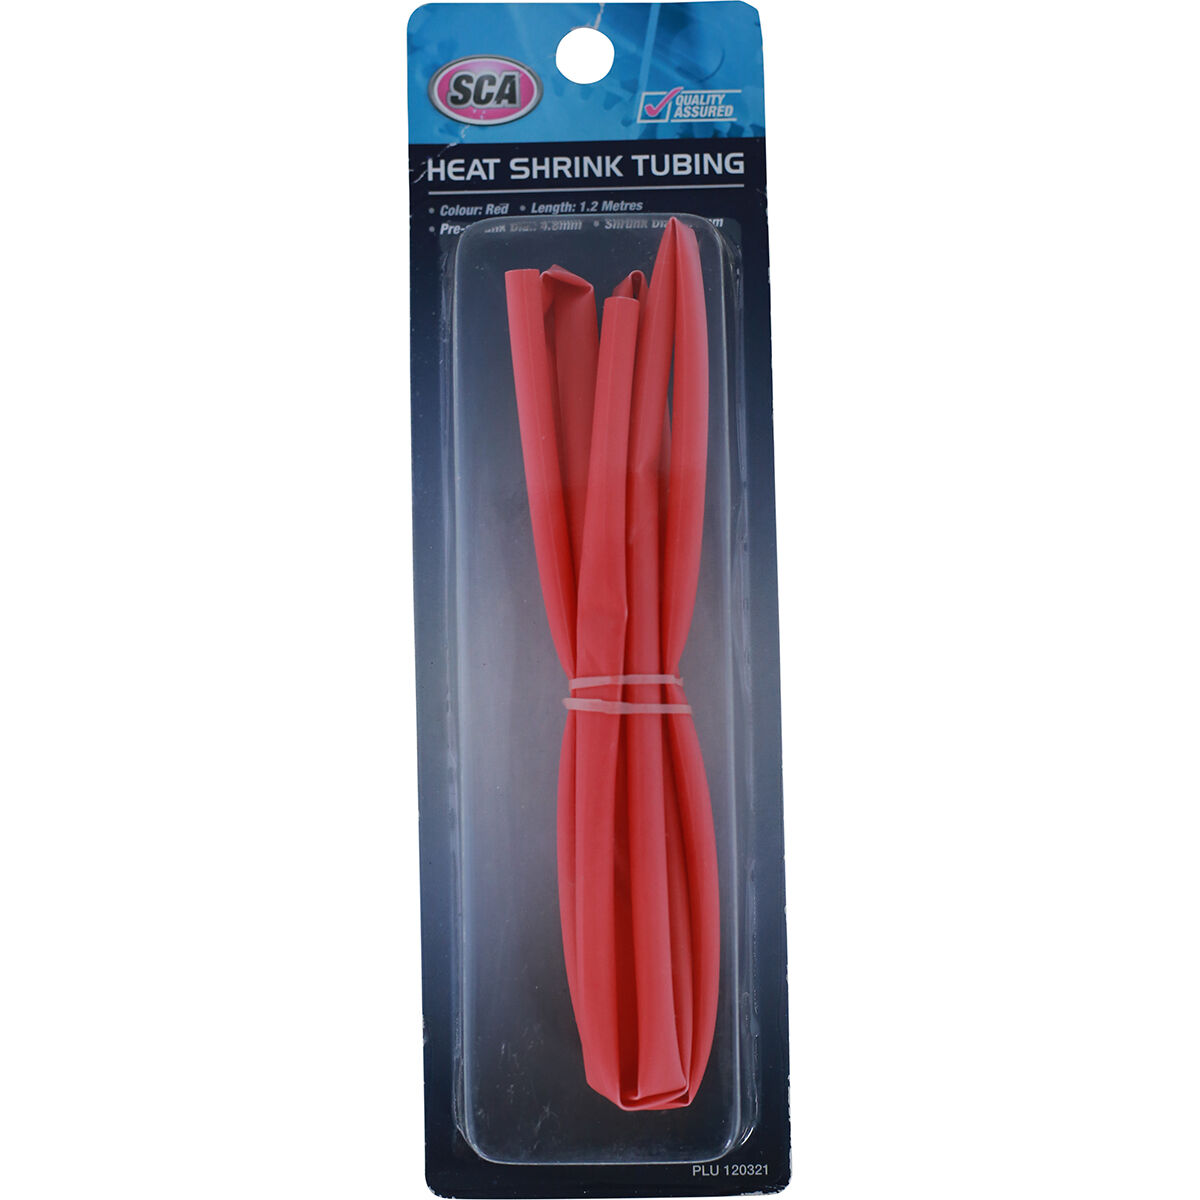 SCA Heat Shrink Tubing - Red, 6.8mm x 1.2m, , scaau_hi-res